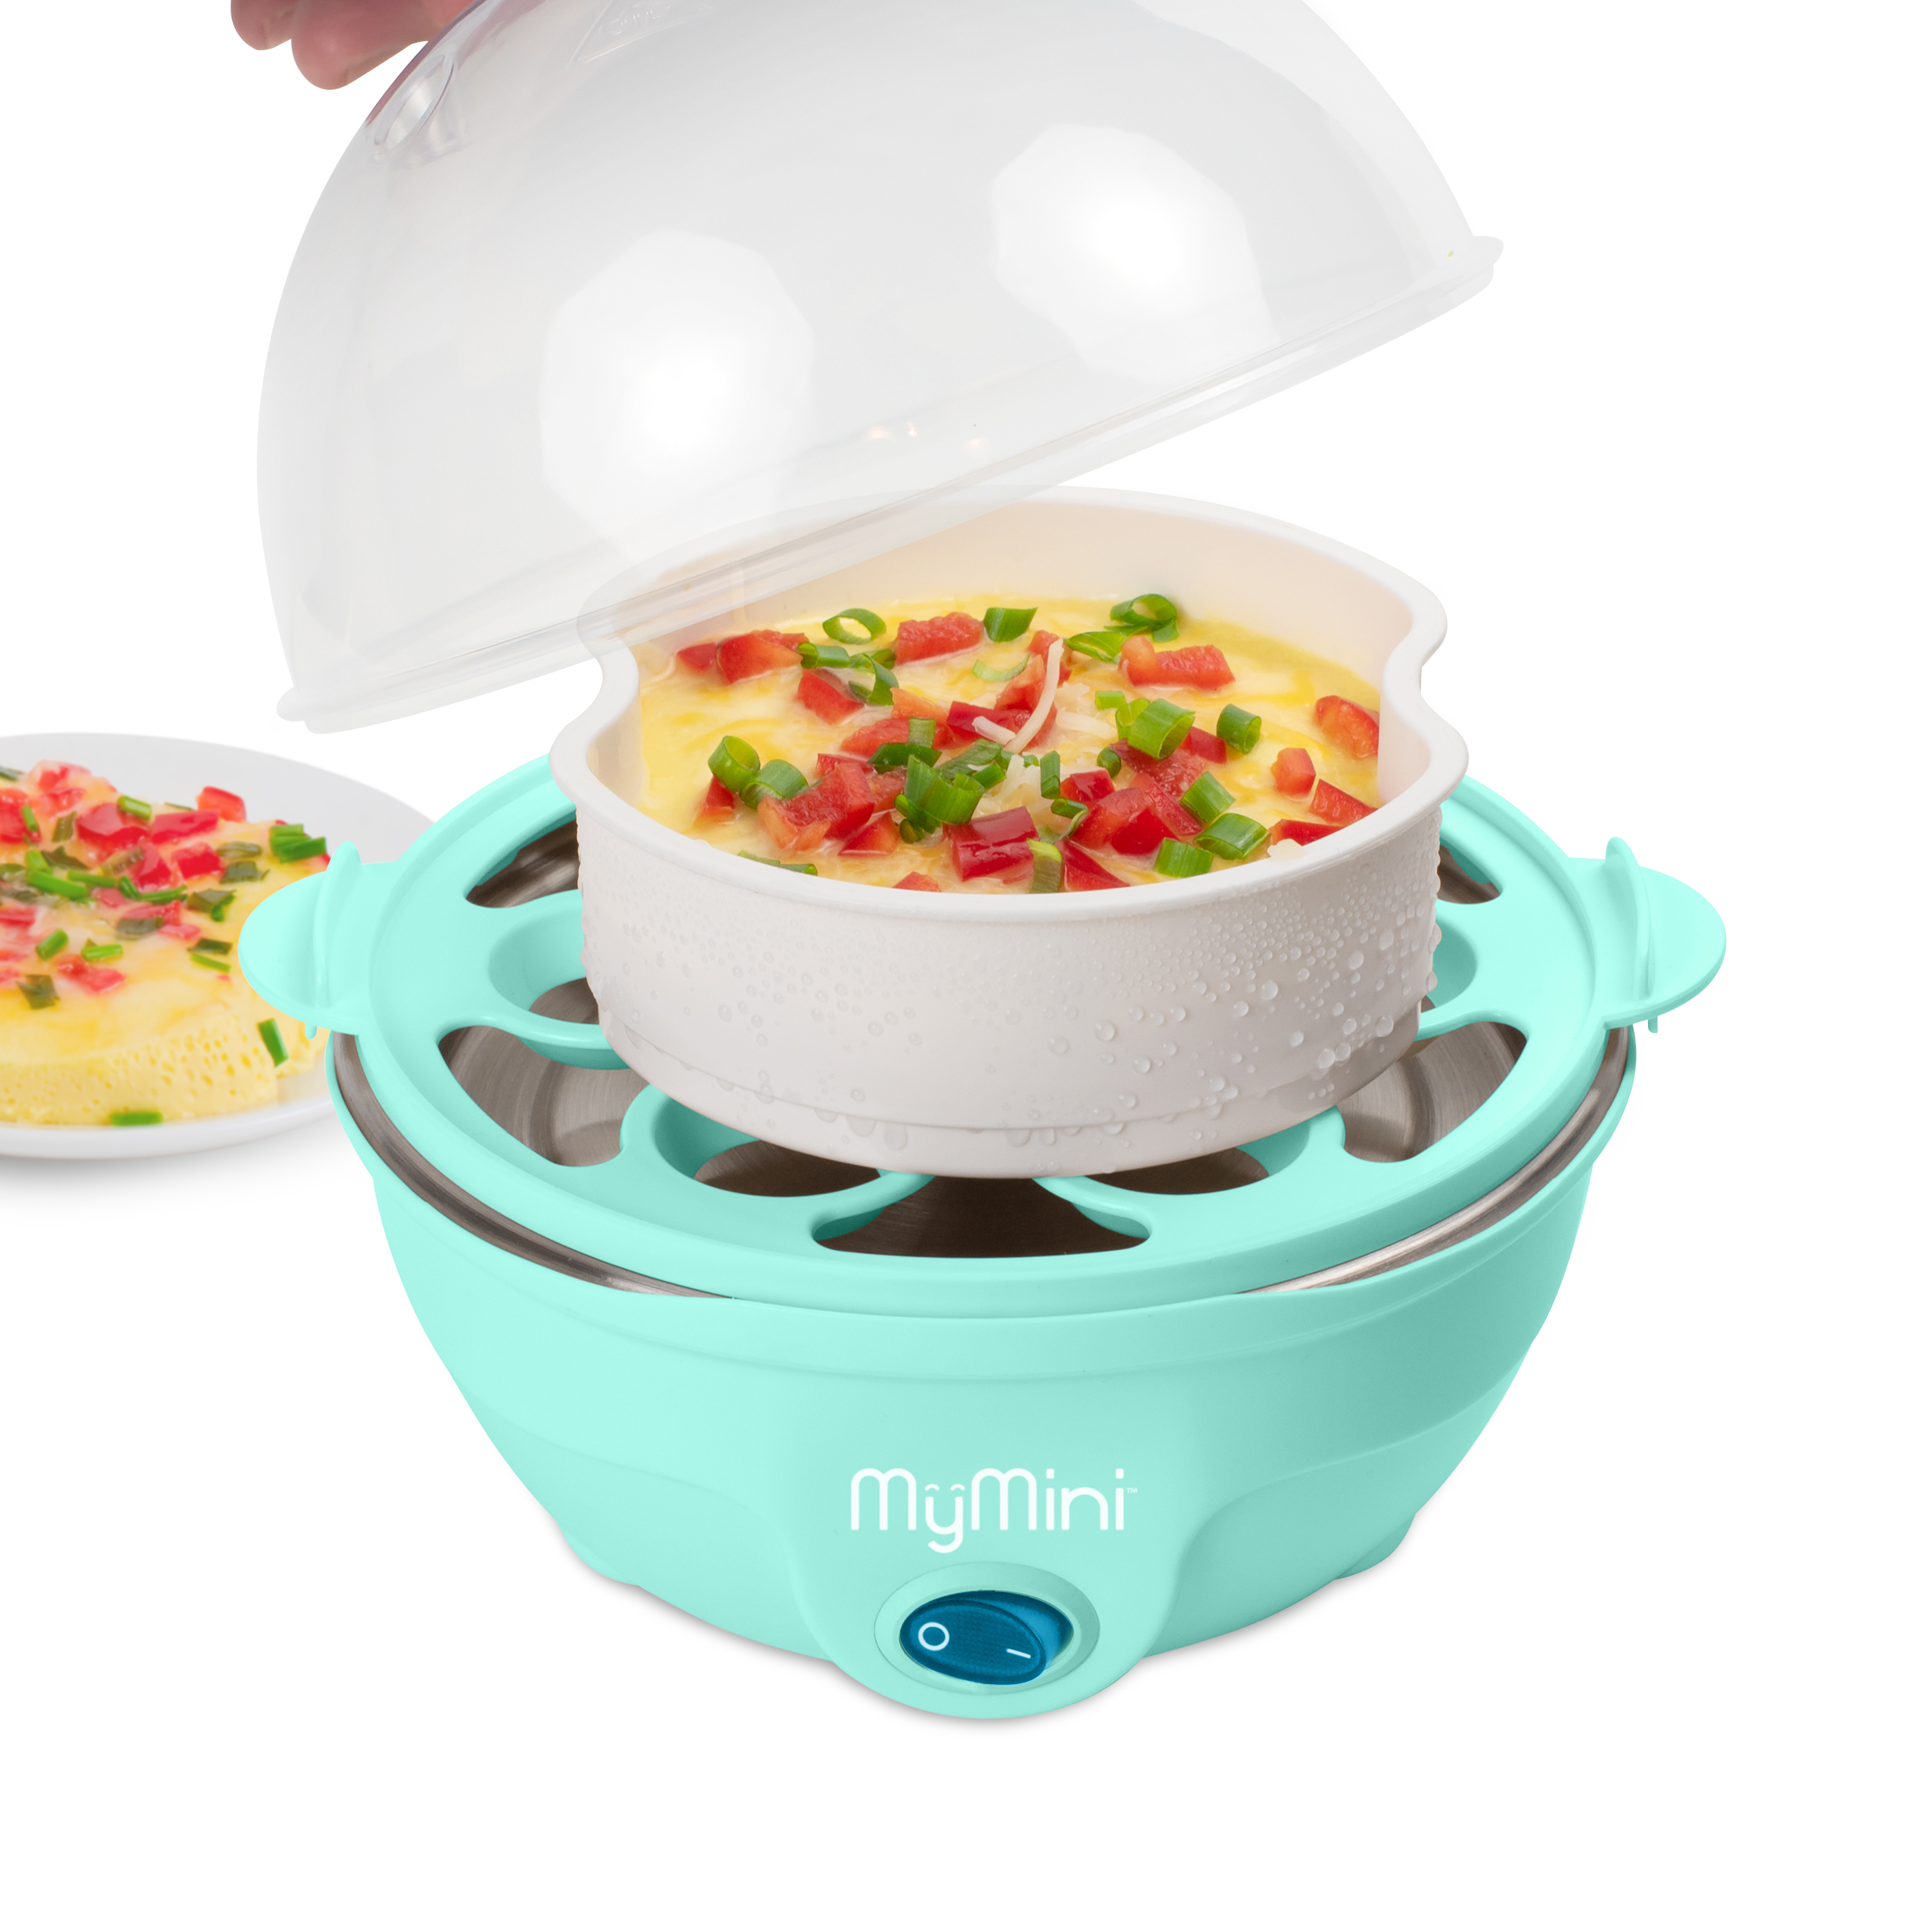 MyMini Premium 7-Egg Cooker, Teal - image 4 of 12